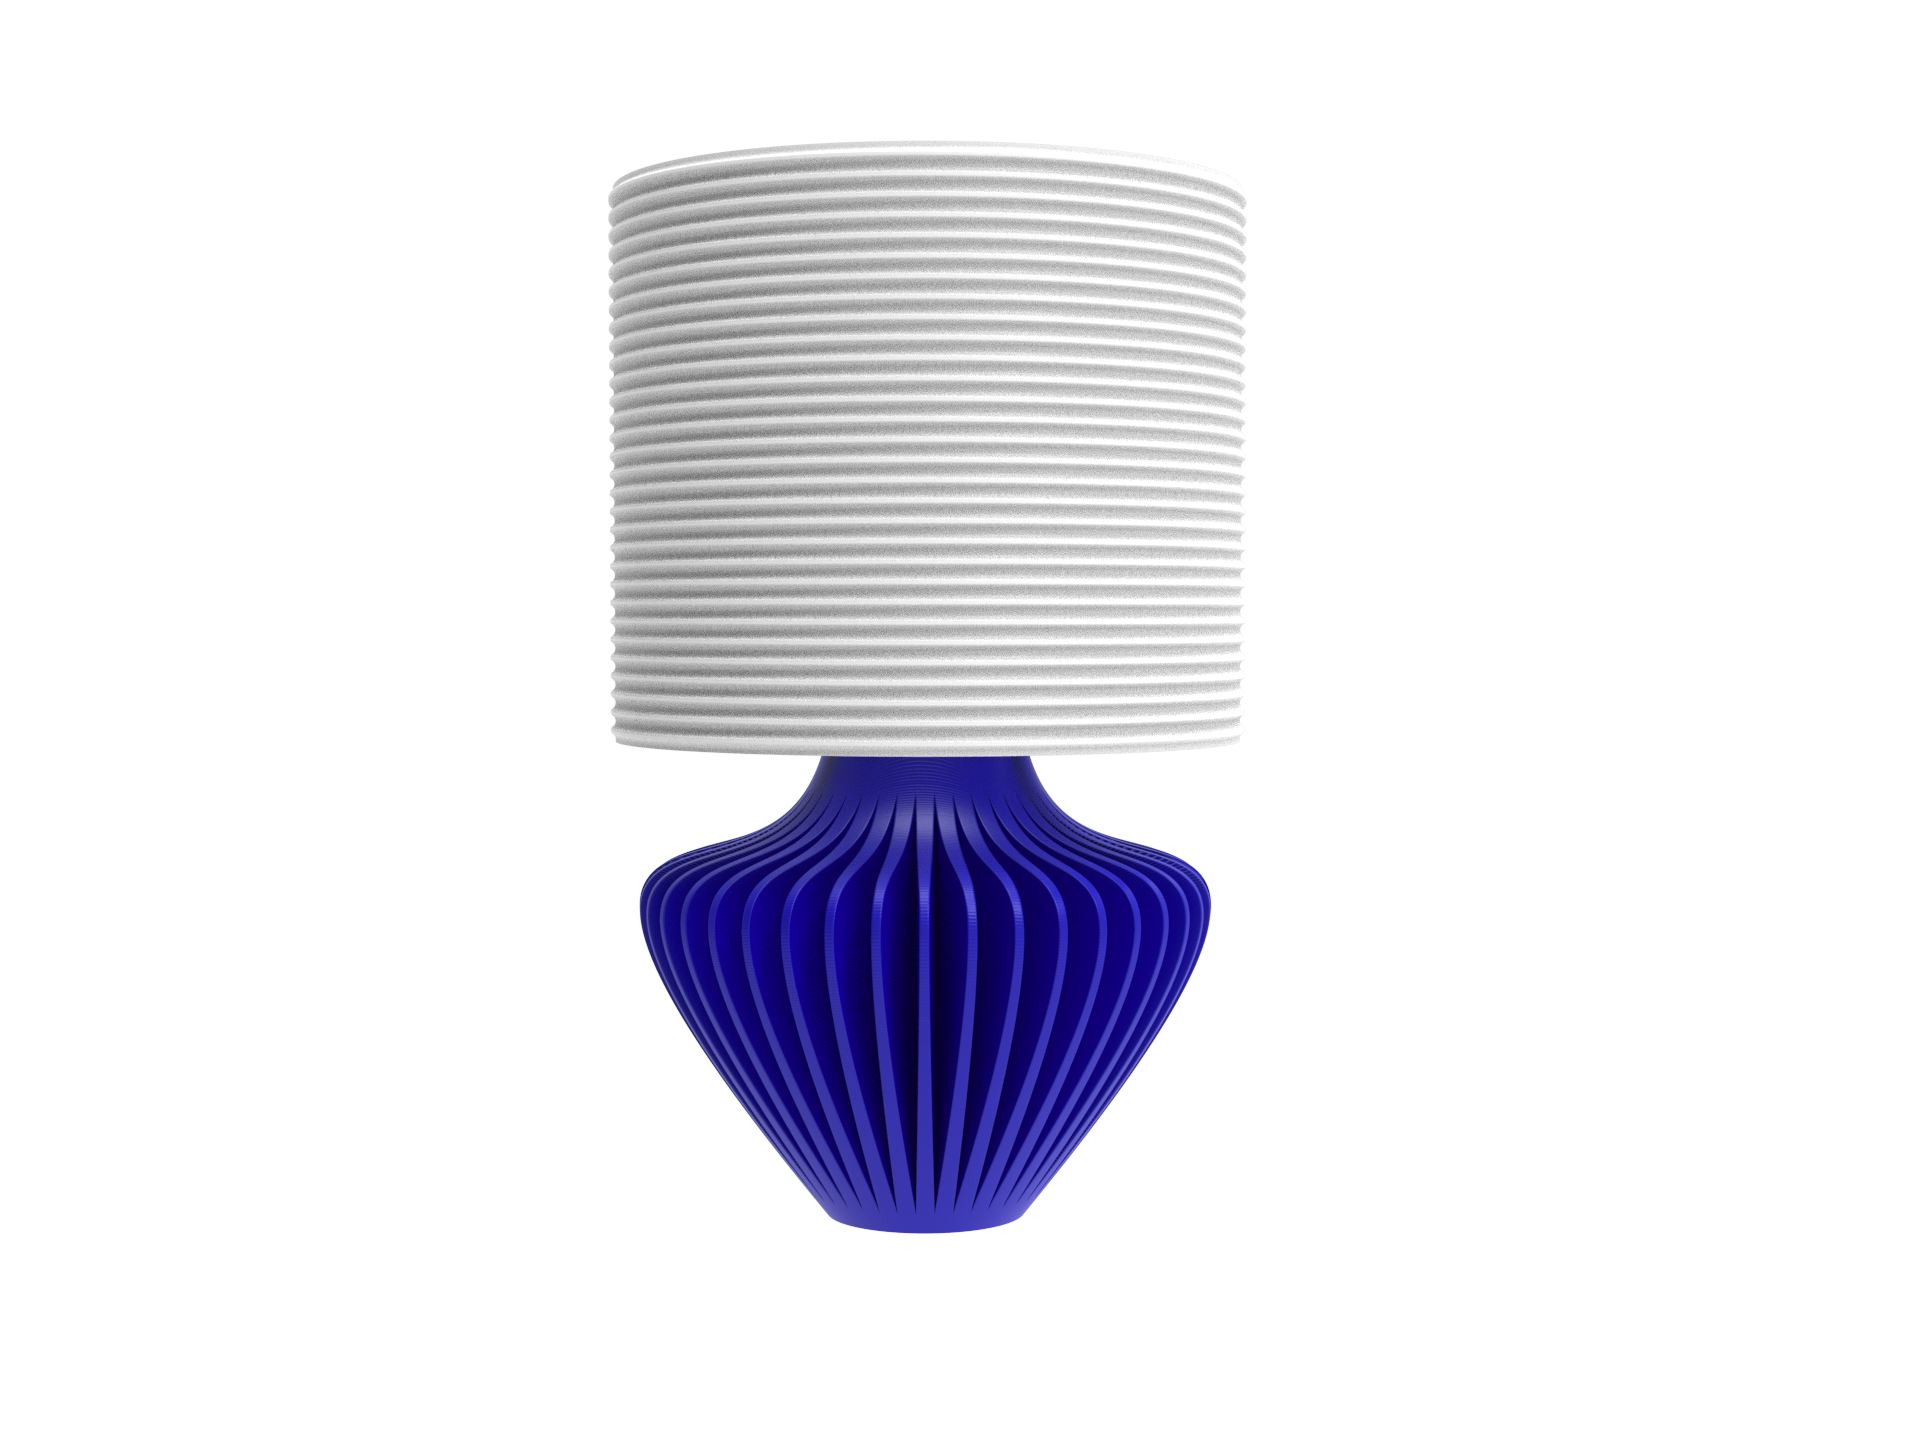 Luminária de Mesa Cleo - Impressão 3D - 2700K Bivolt